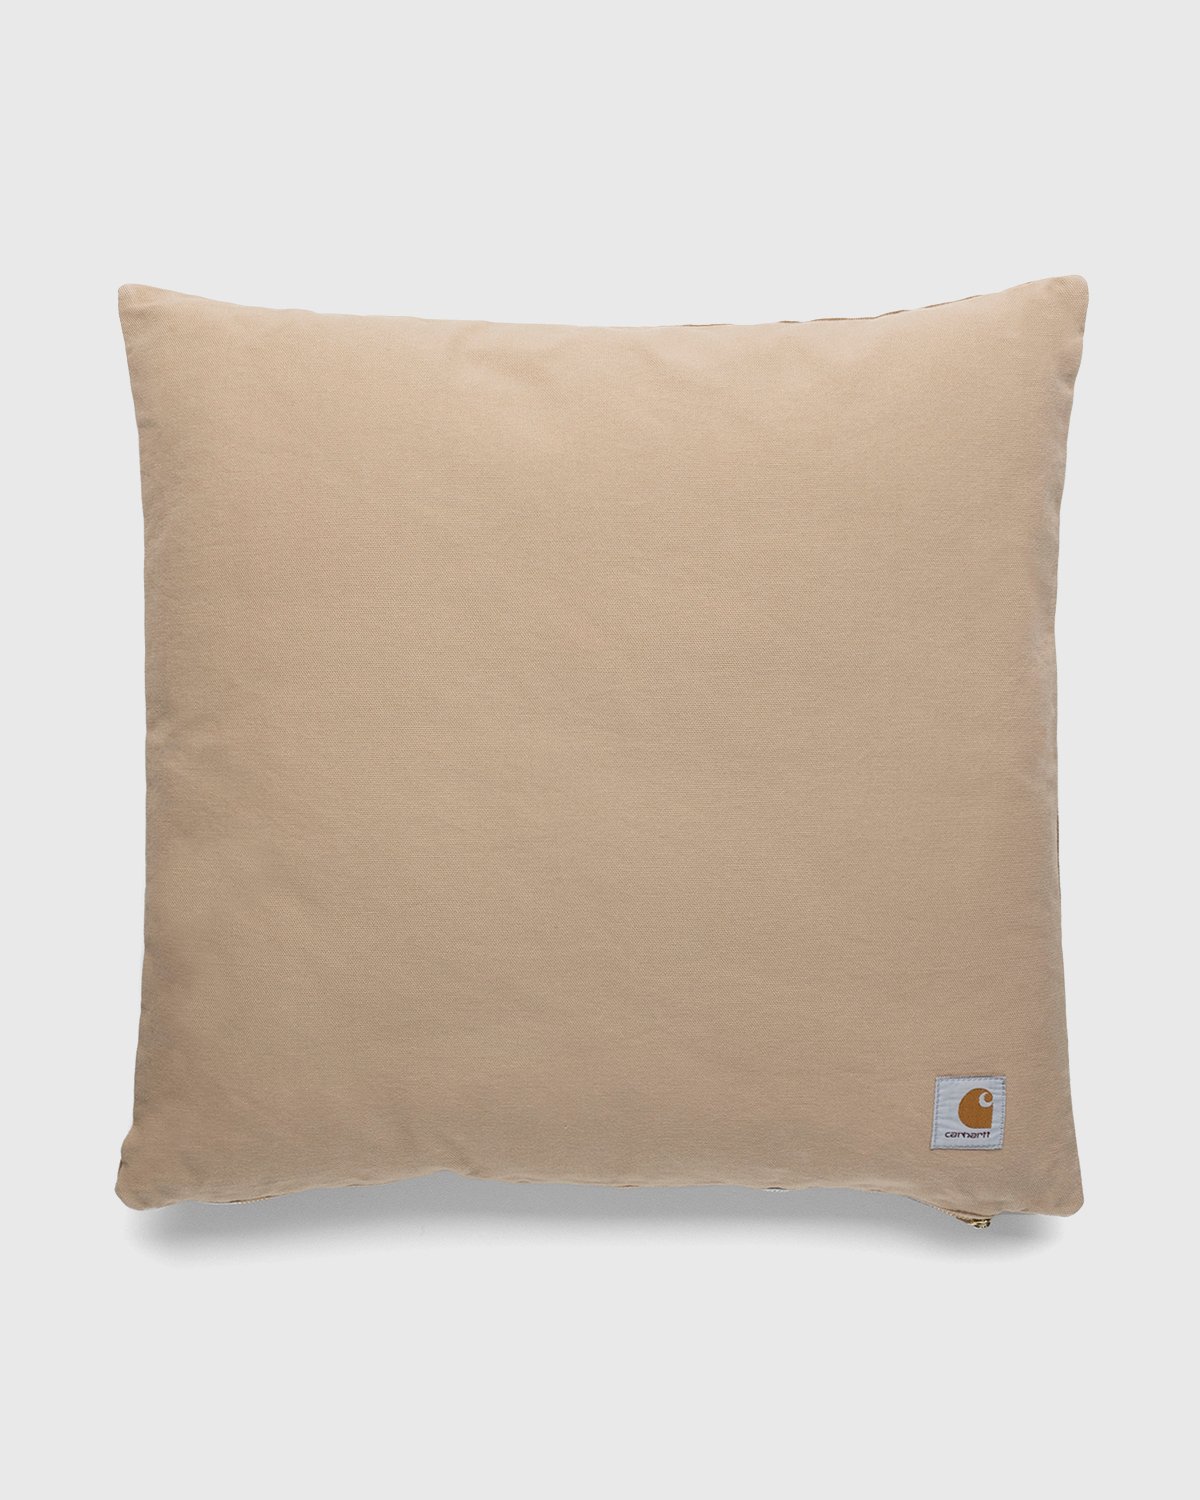 Carhartt WIP - Tonare Cushion Dusty Hamilton Brown - Lifestyle - Brown - Image 1